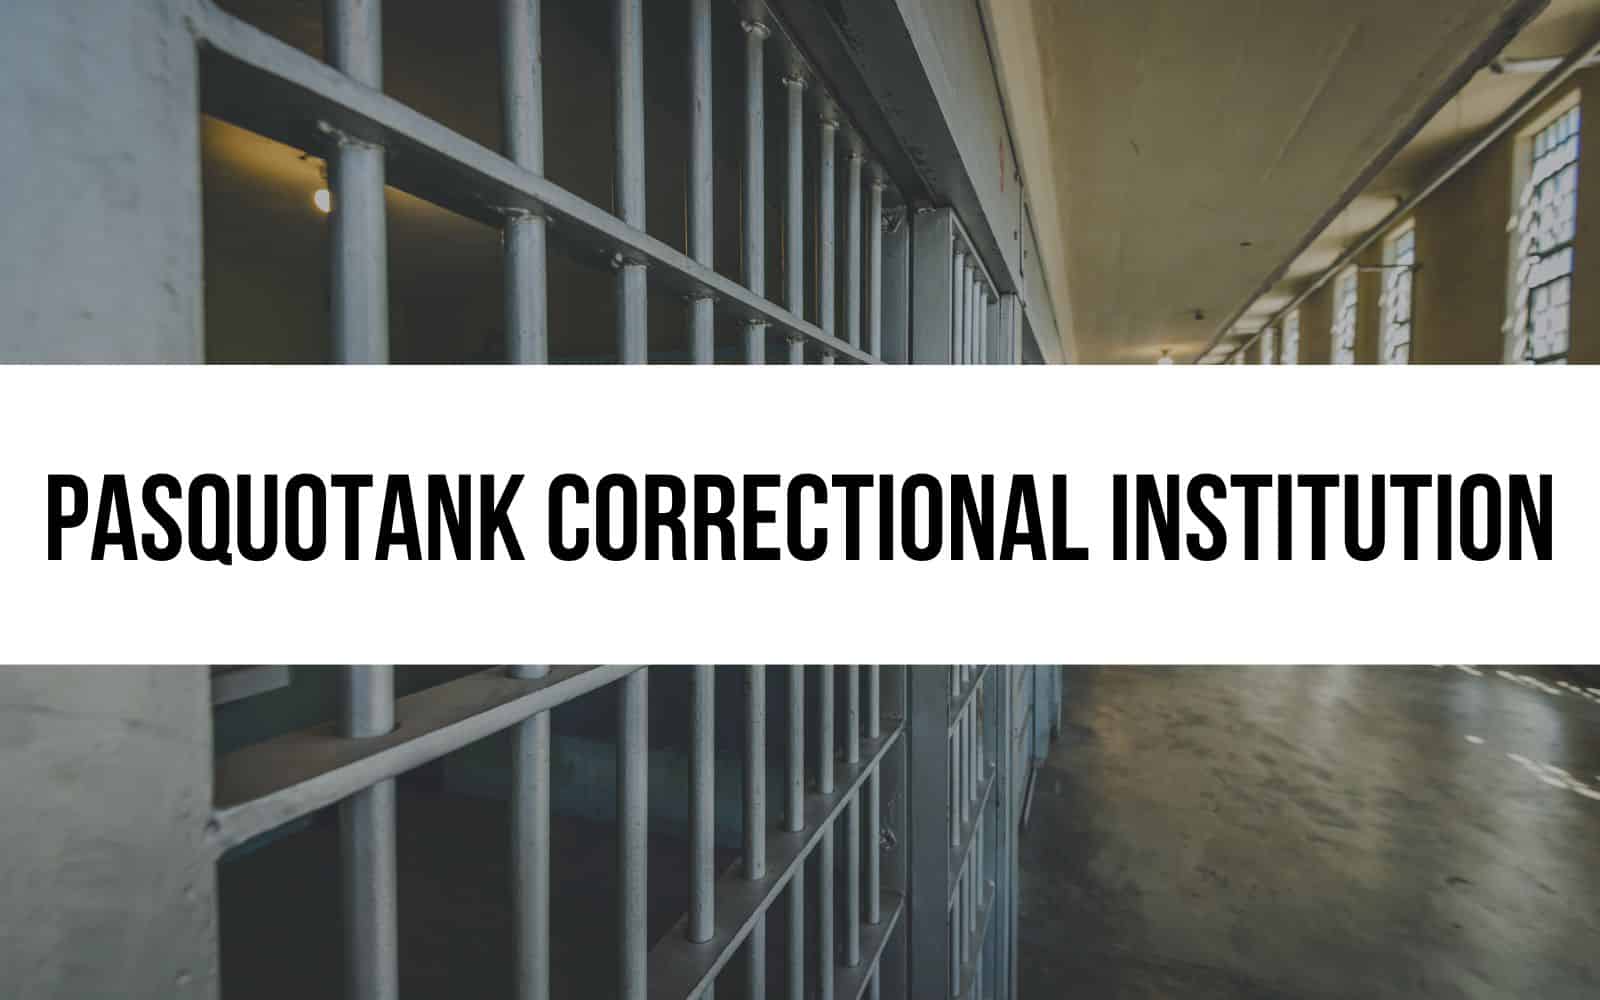 Pasquotank Correctional Institution